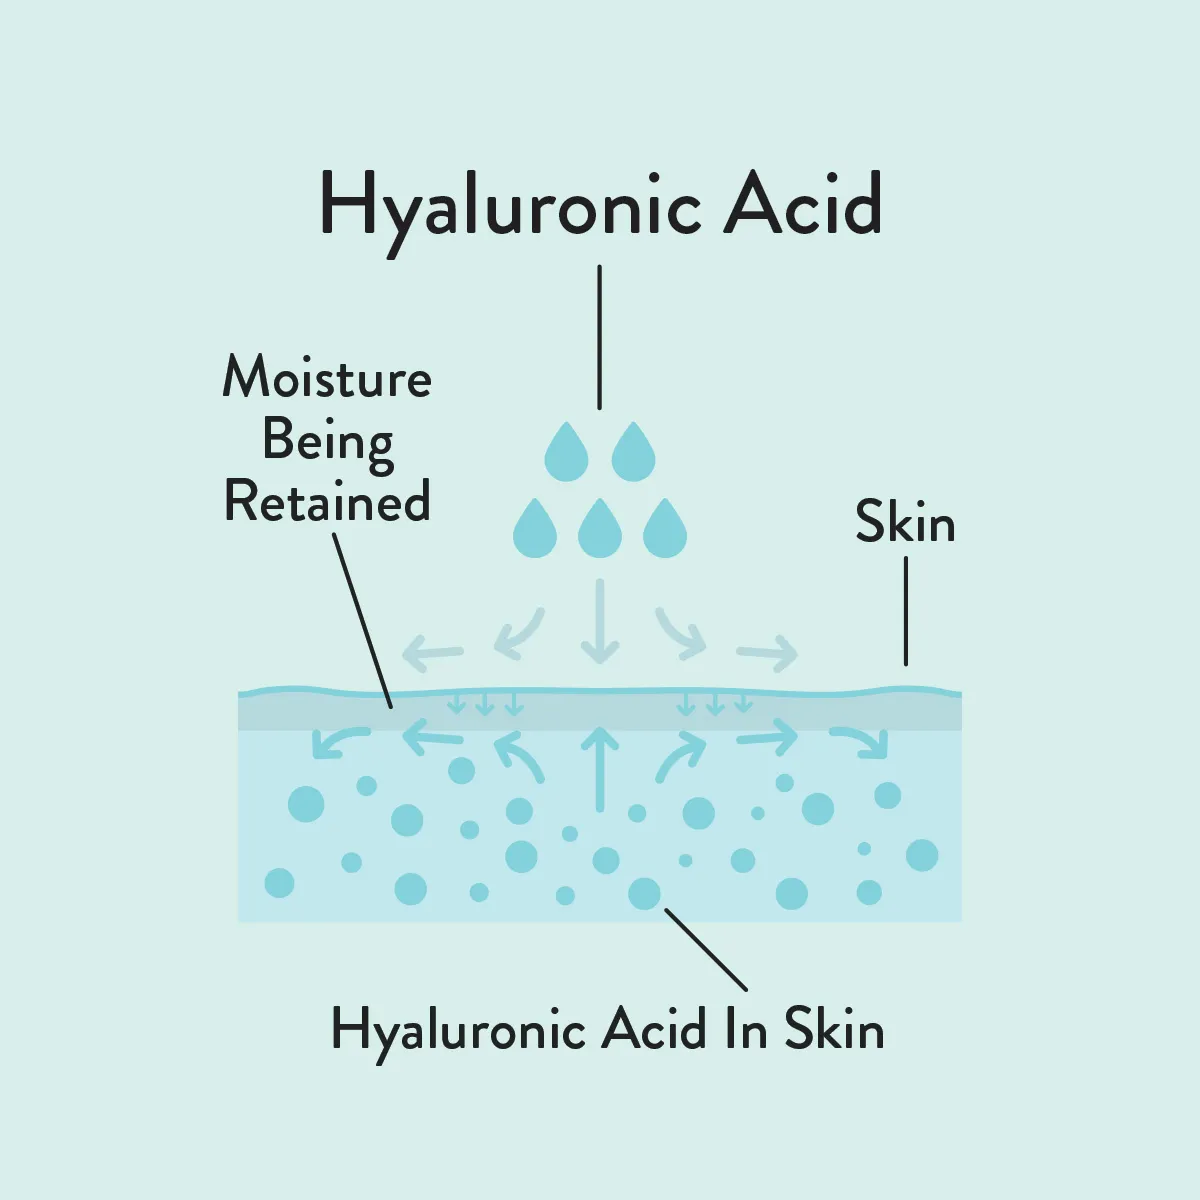 Hyaluronic acid informative diagram